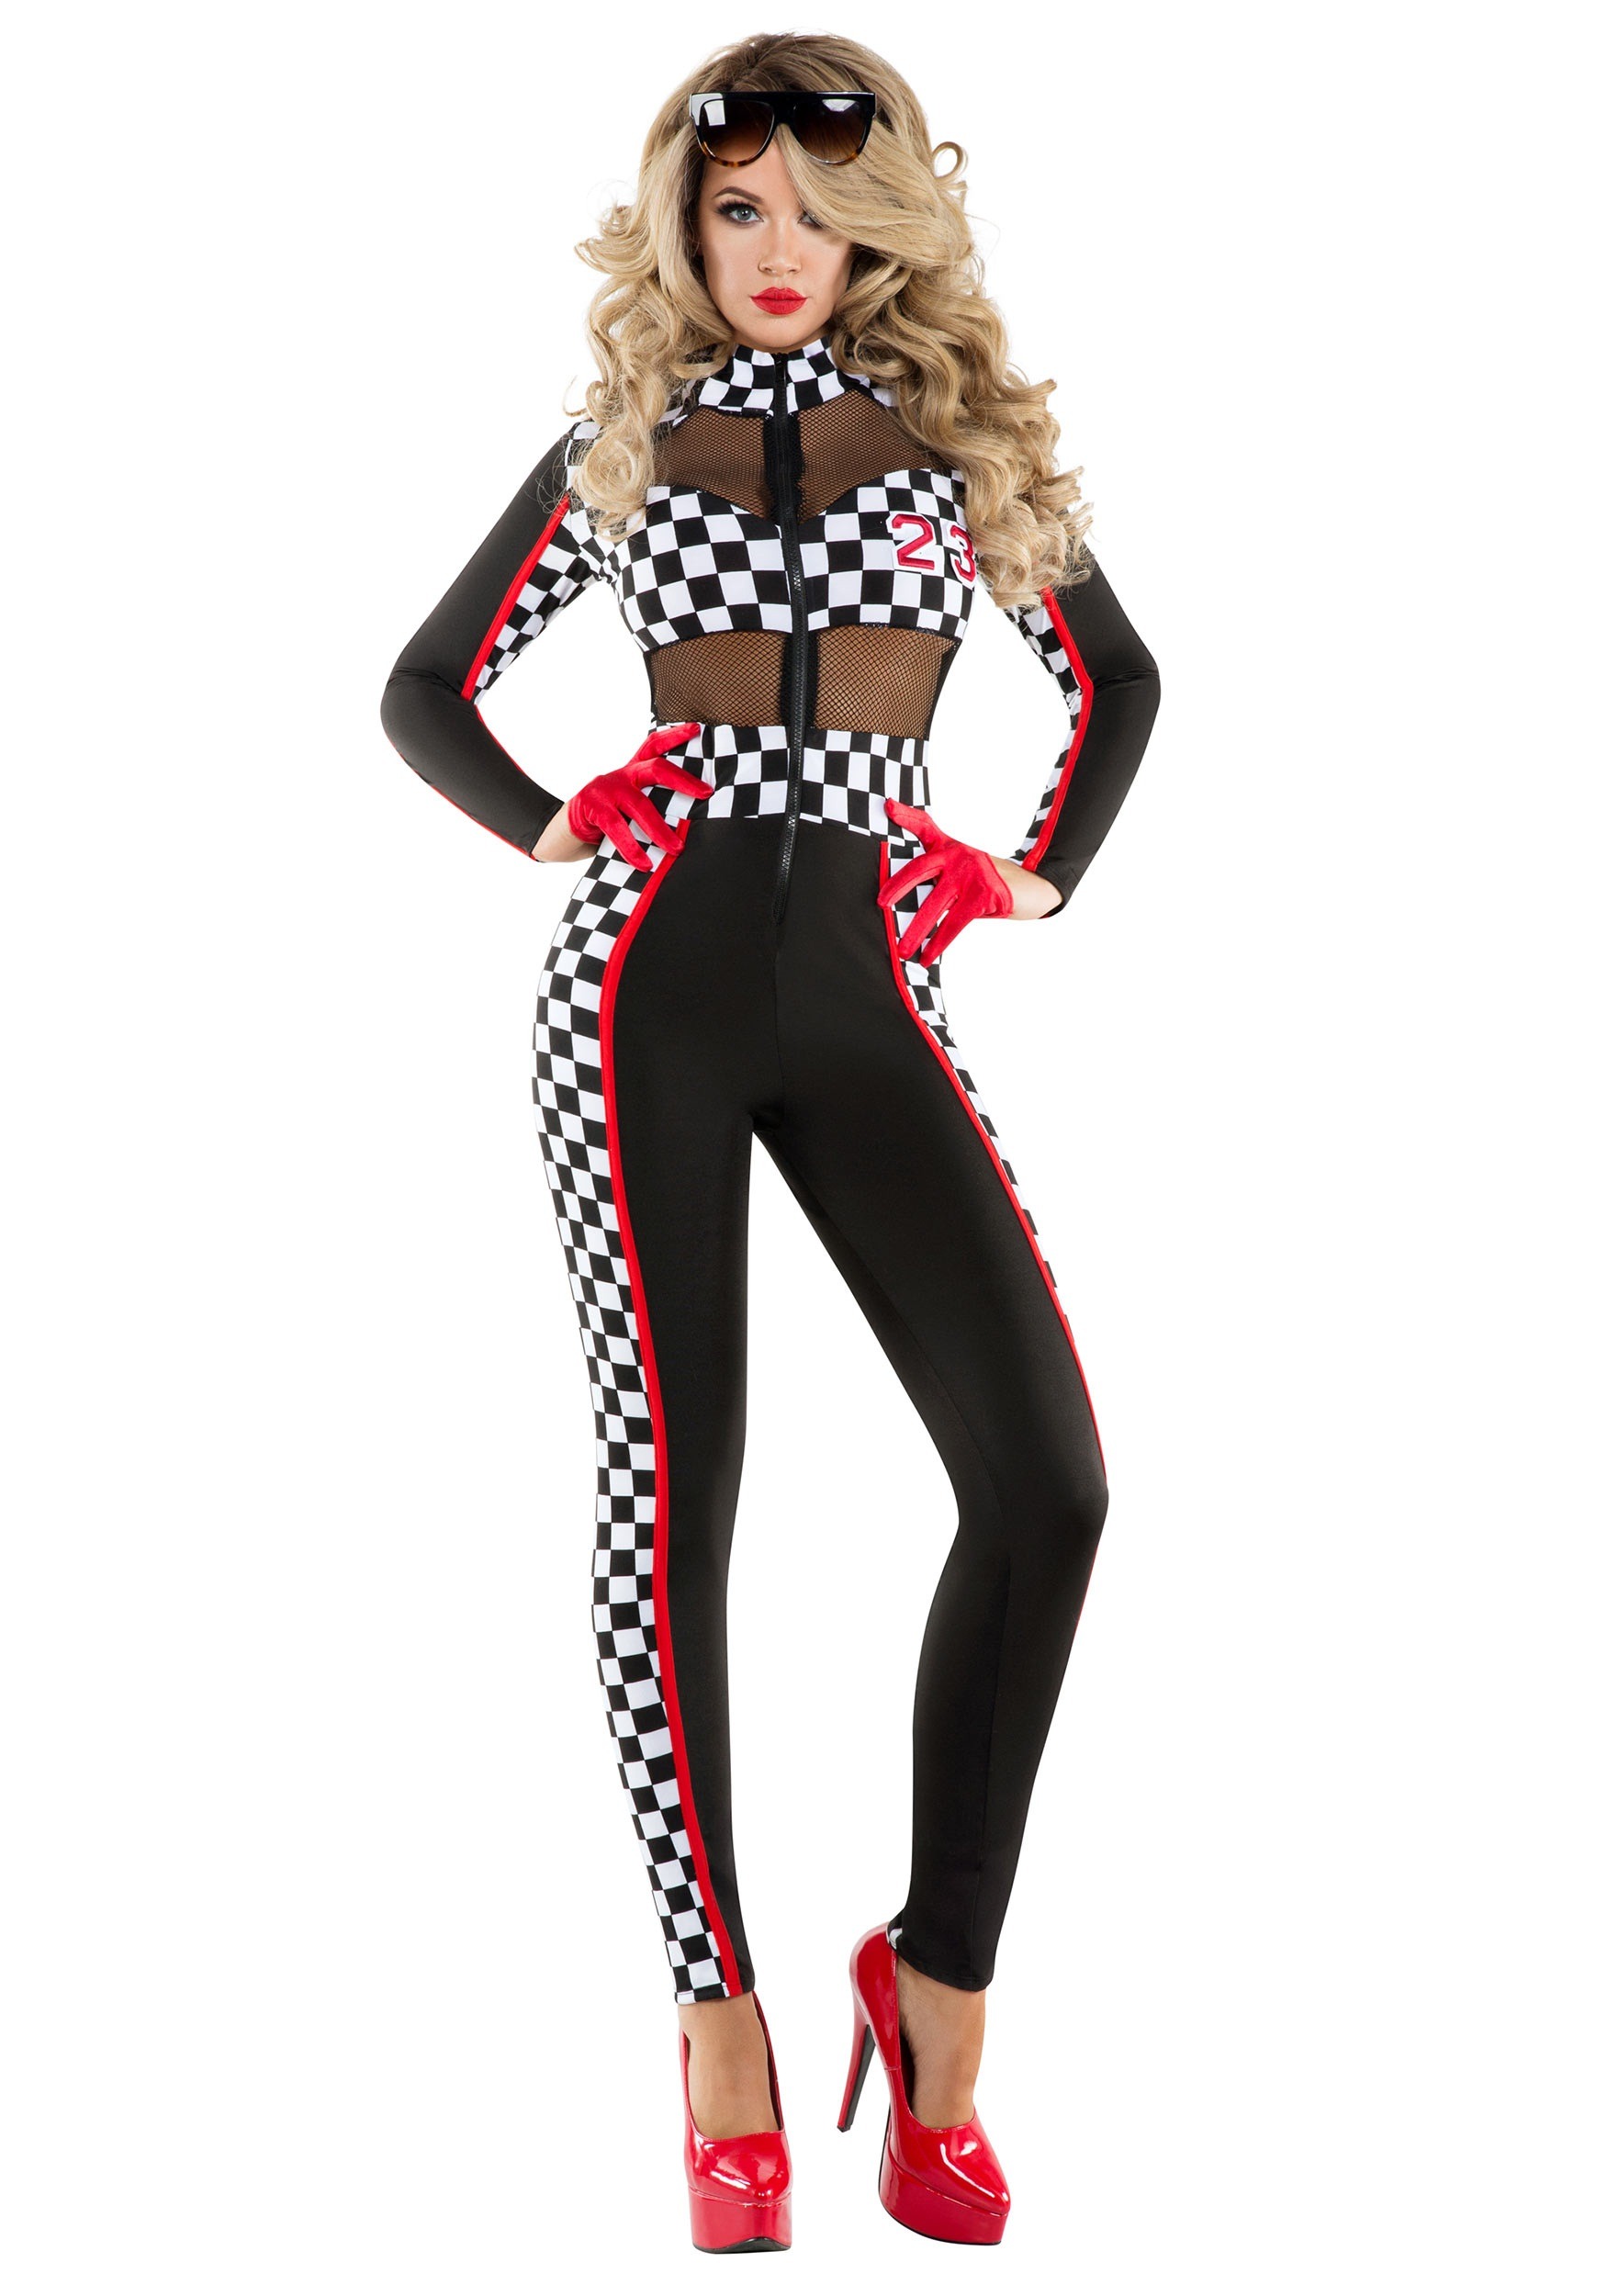 racing costume for women